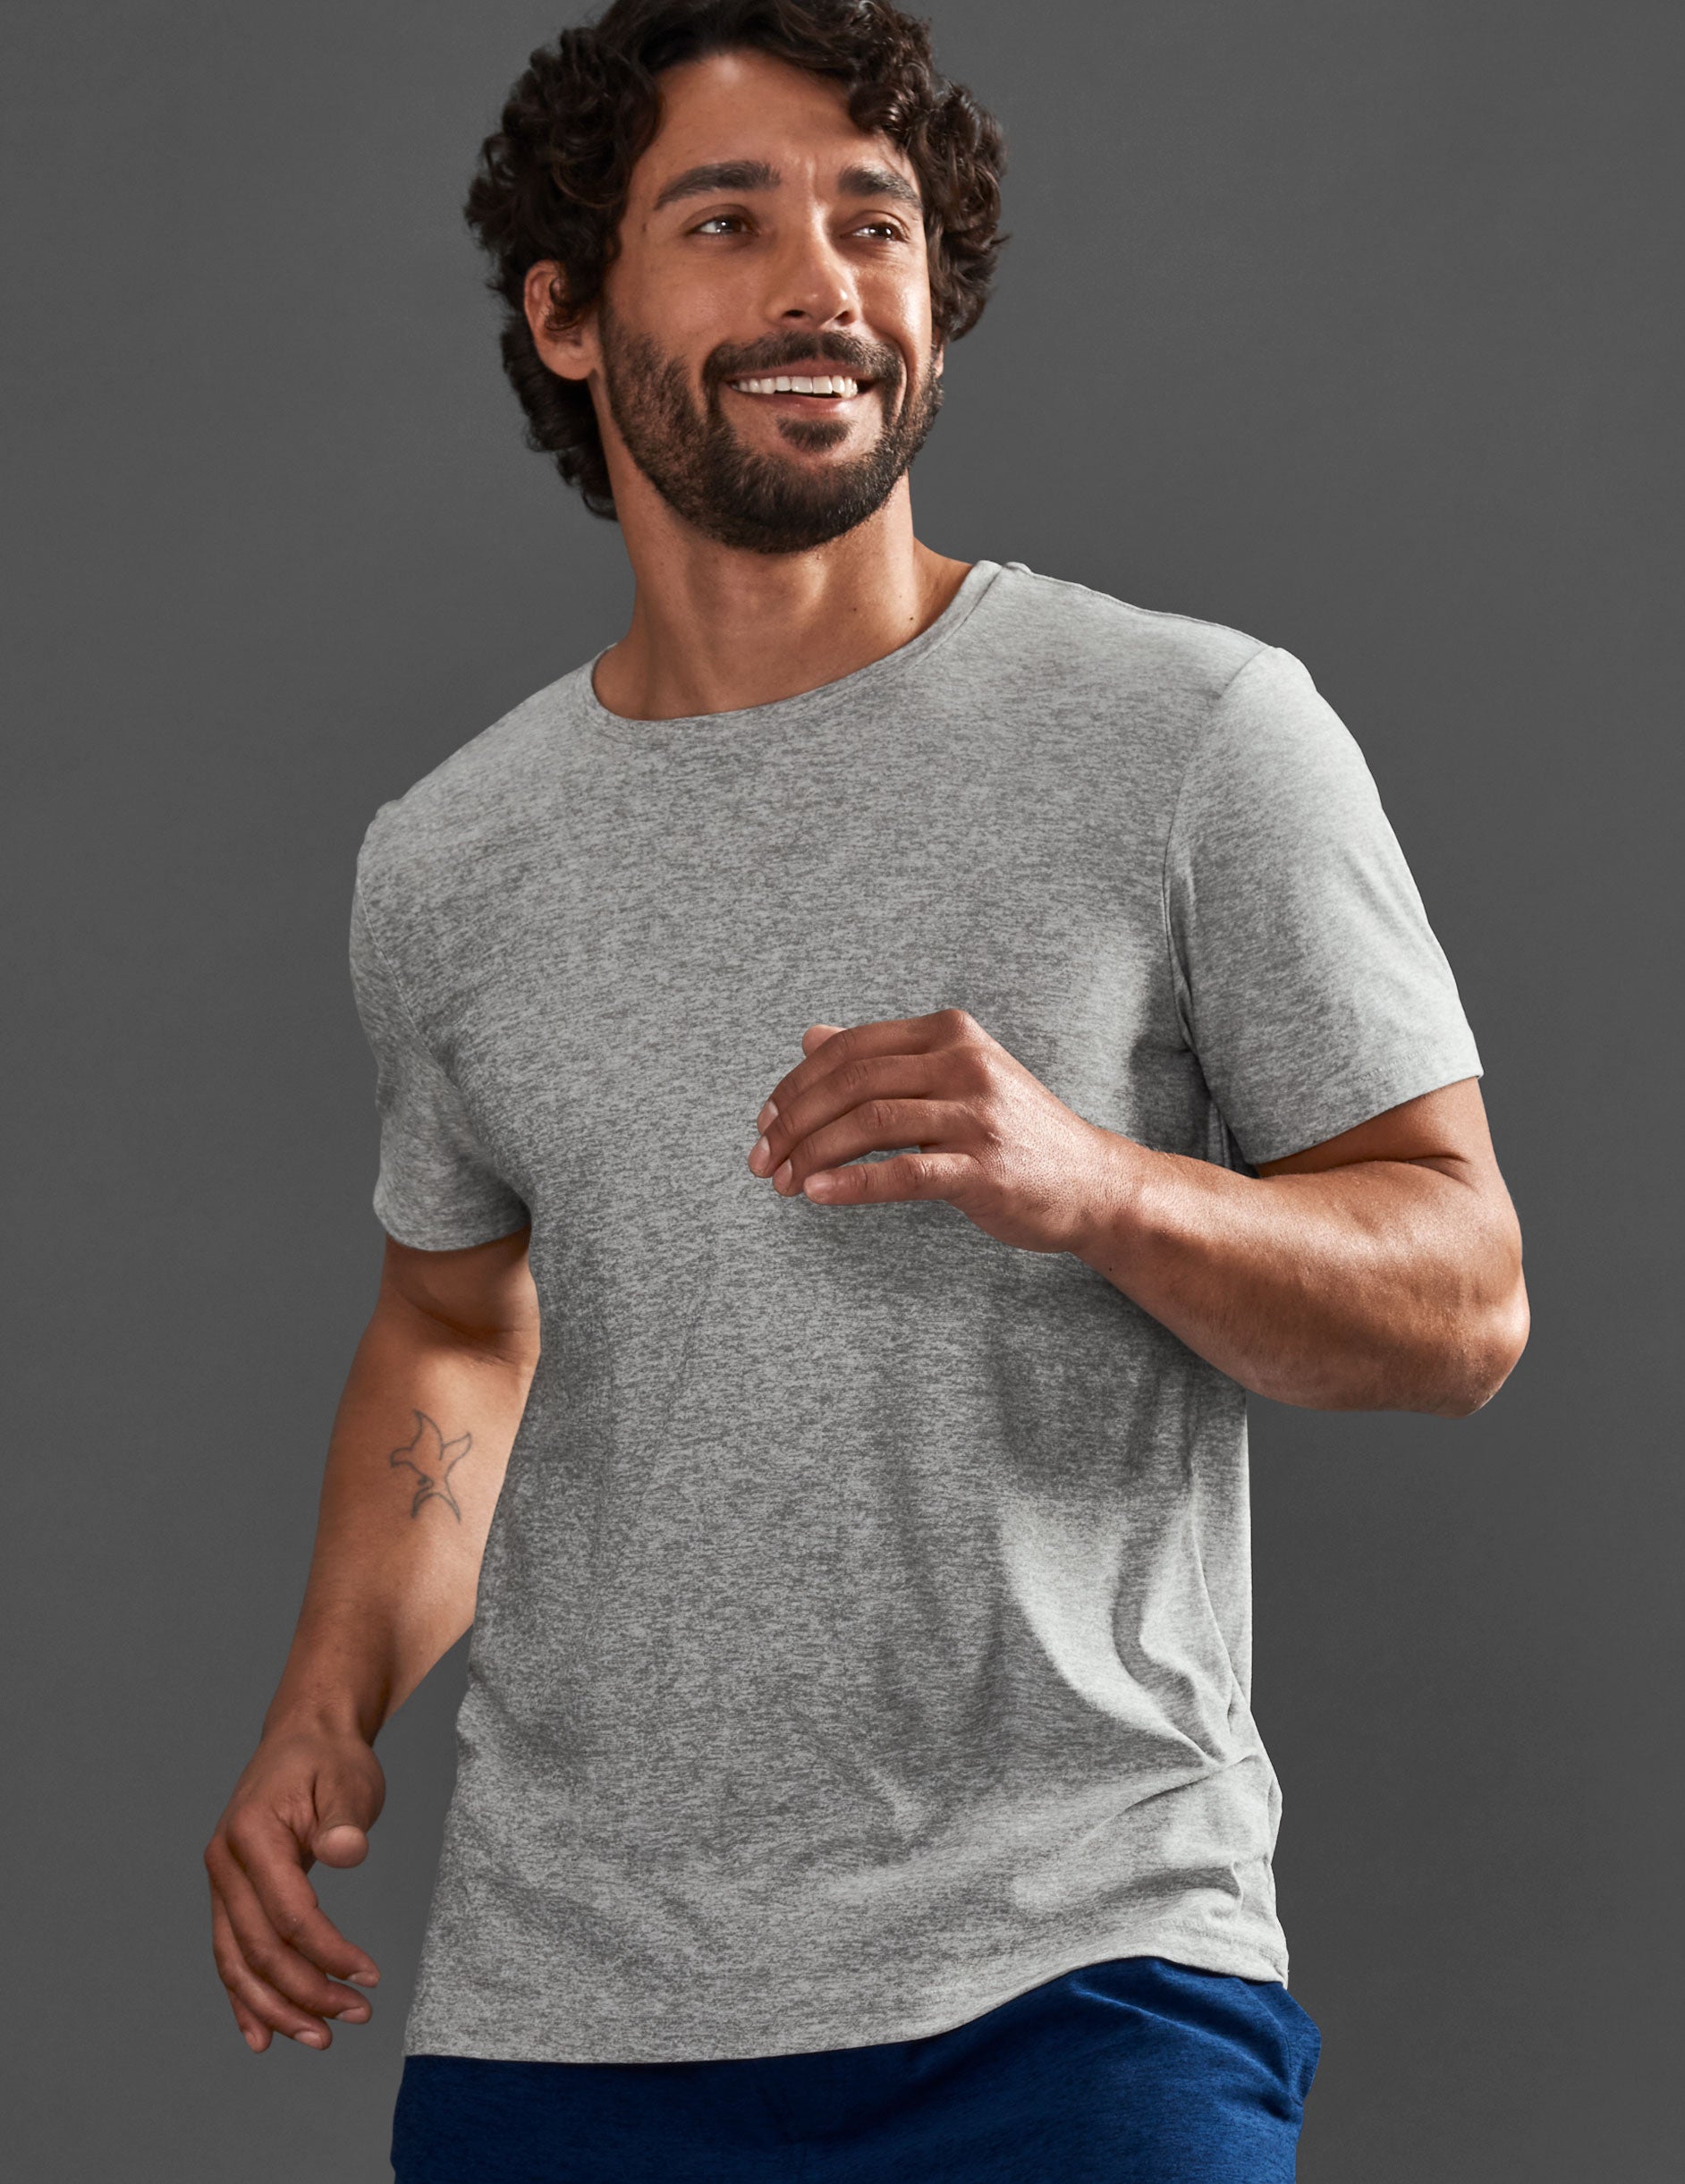 Men's Lightweight Burnout Yoga Tee Shirt - Gray 